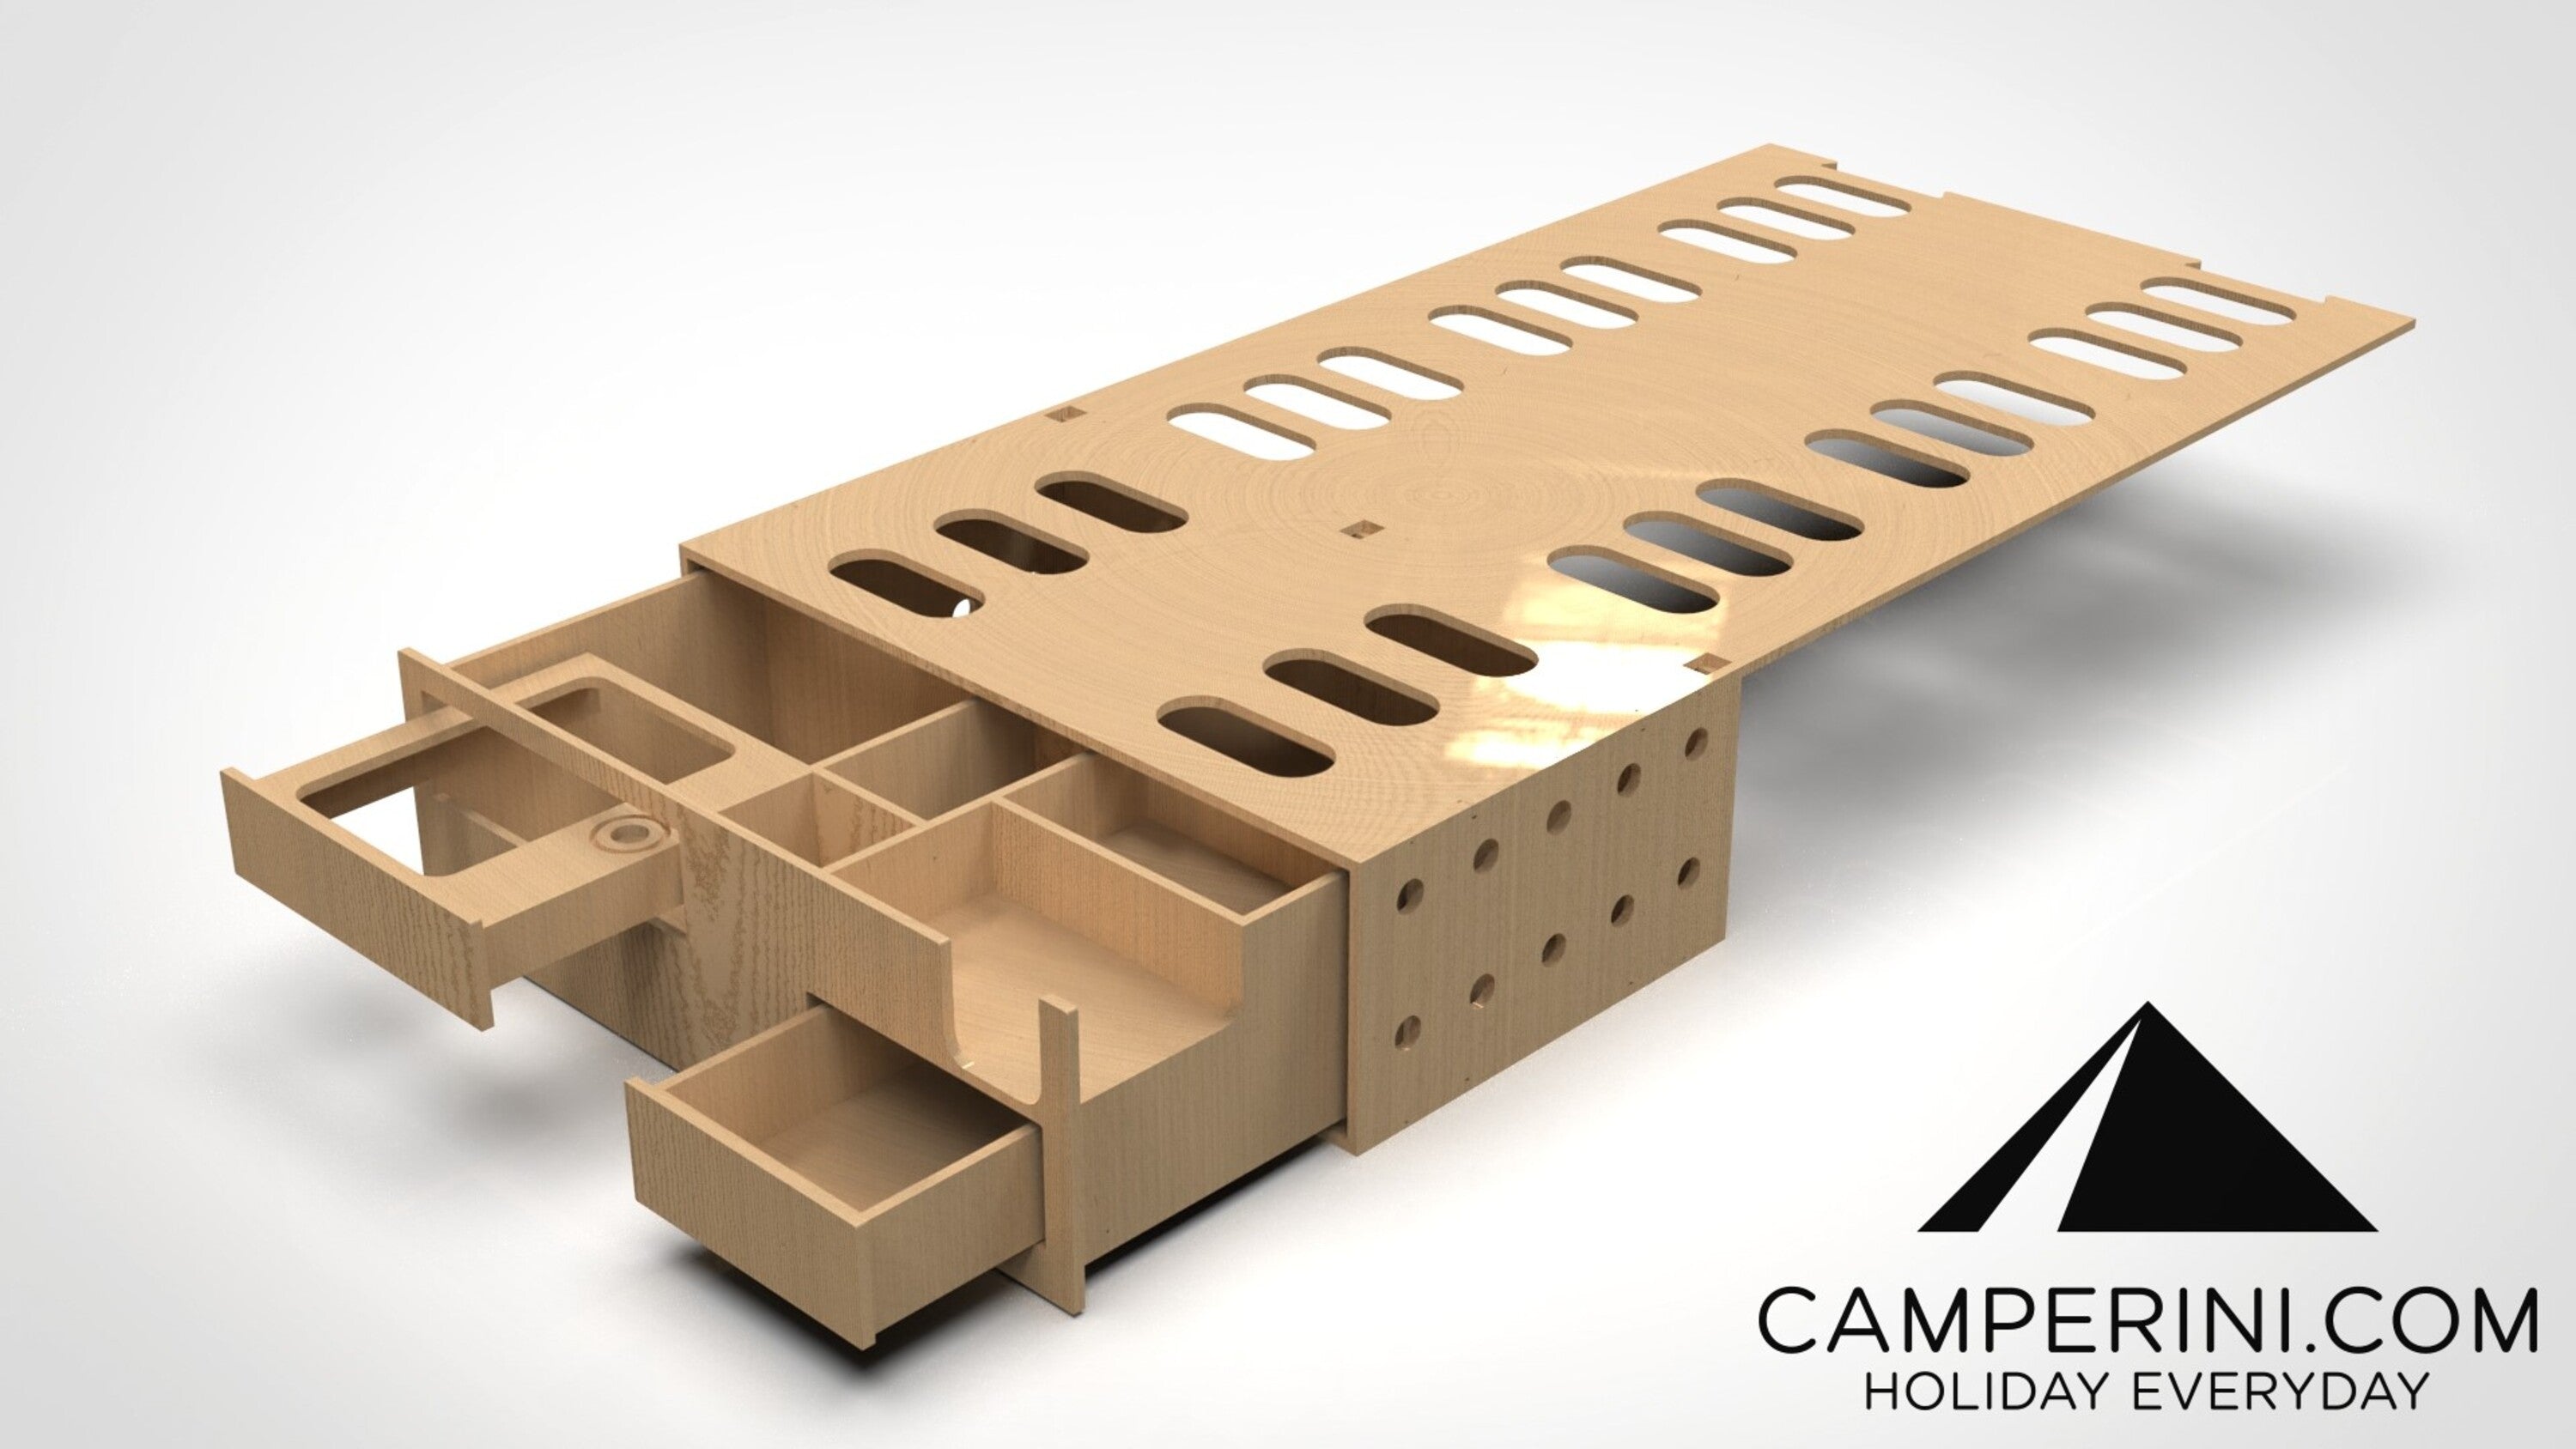 Camperini MIDI - Campervan module for the everyday car